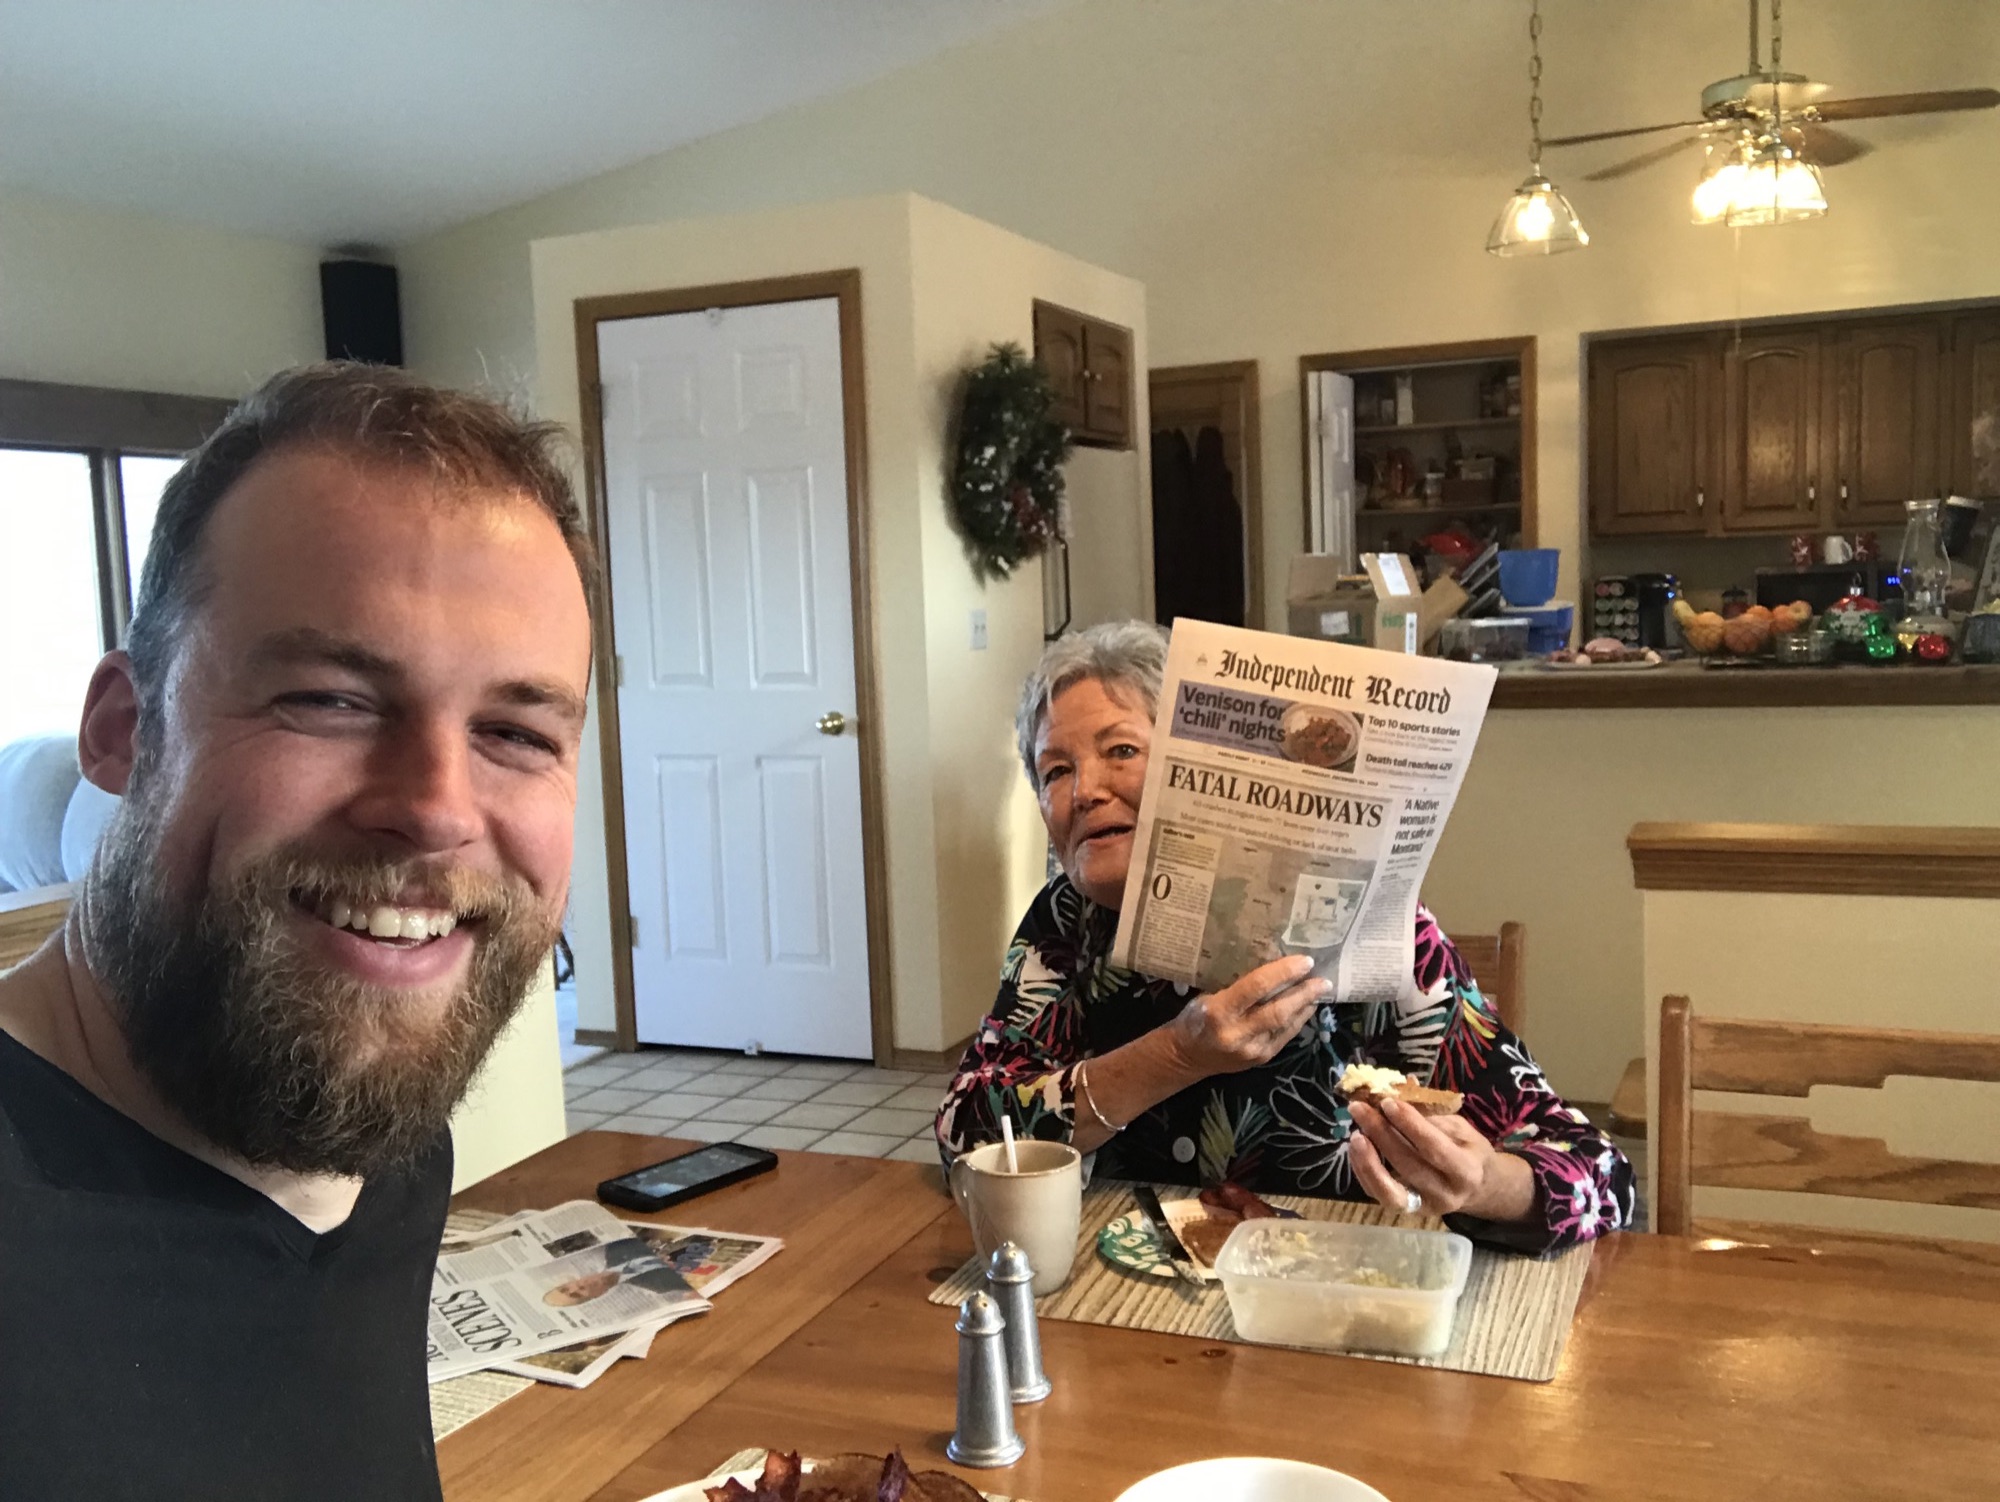 Breakfast with grandma